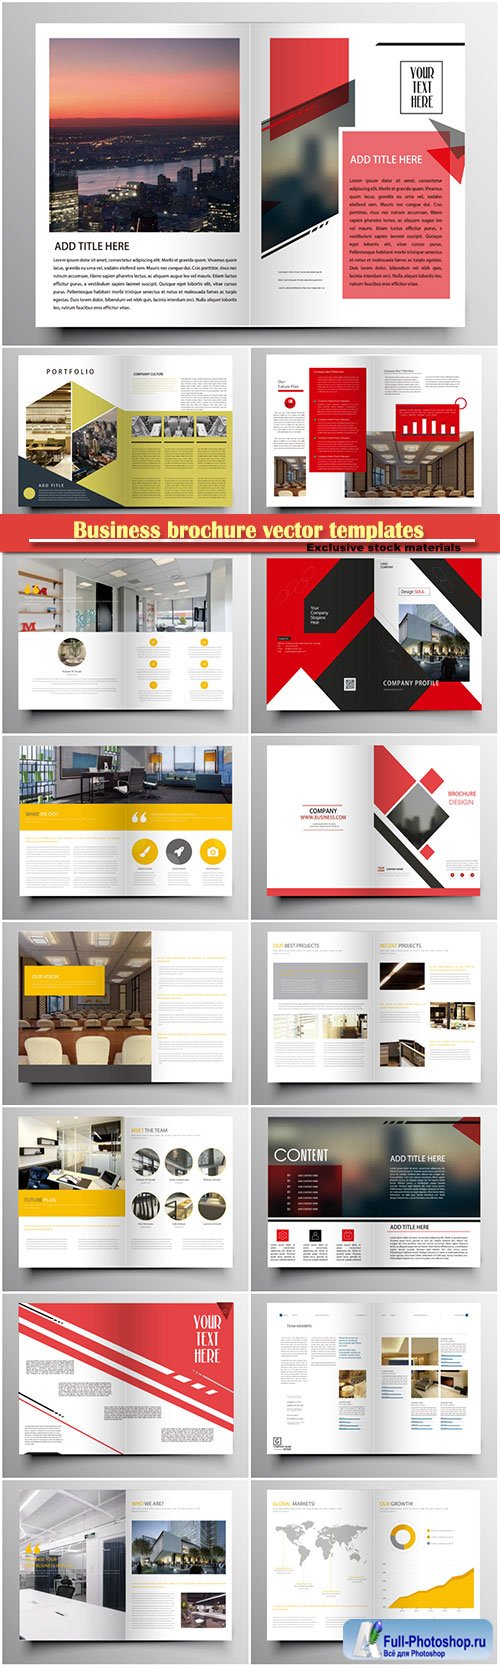 Business brochure vector templates, magazine cover, business mockup, education, presentation, report # 67